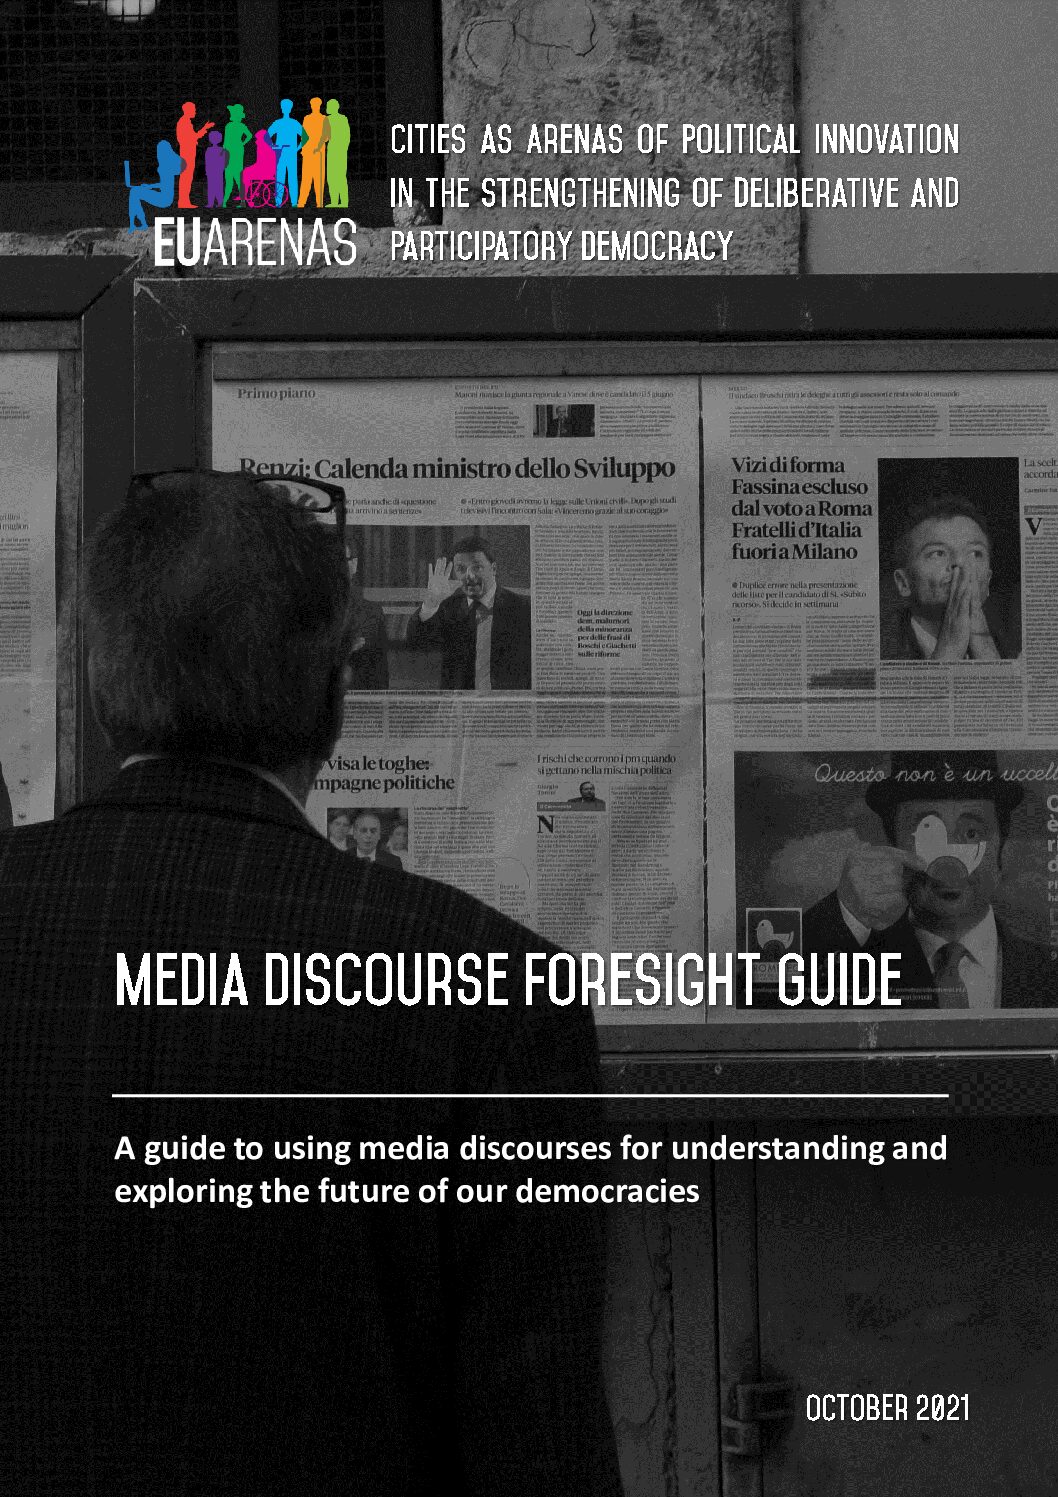 EUARENAS’ Media Discourse Foresight Guide available now!